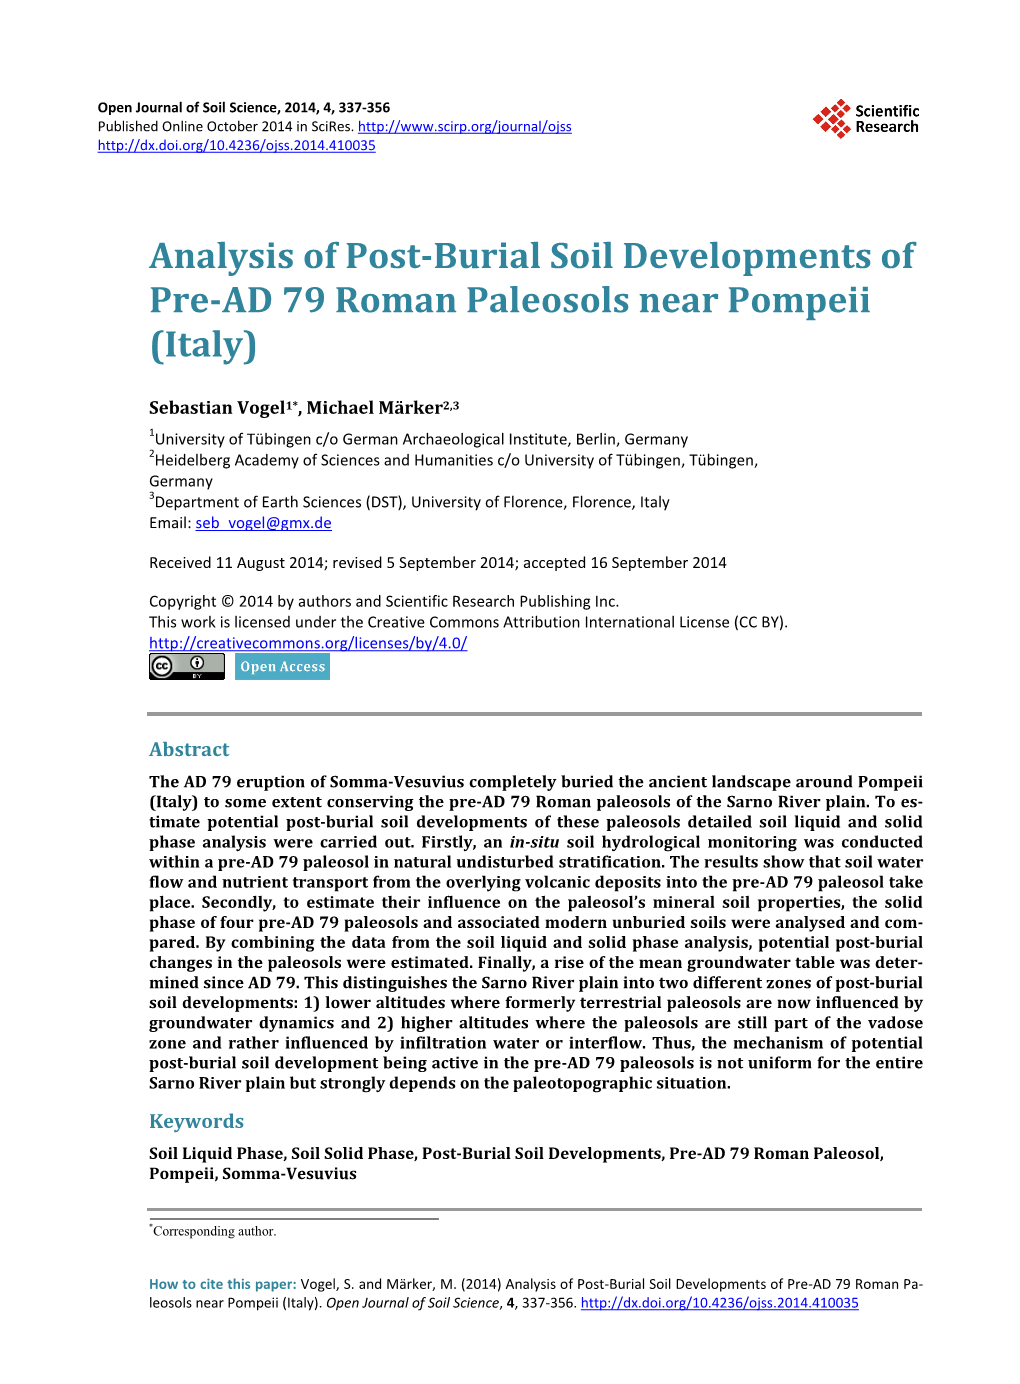 Analysis of Post-Burial Soil Developments of Pre-AD 79 Roman Paleosols Near Pompeii (Italy)